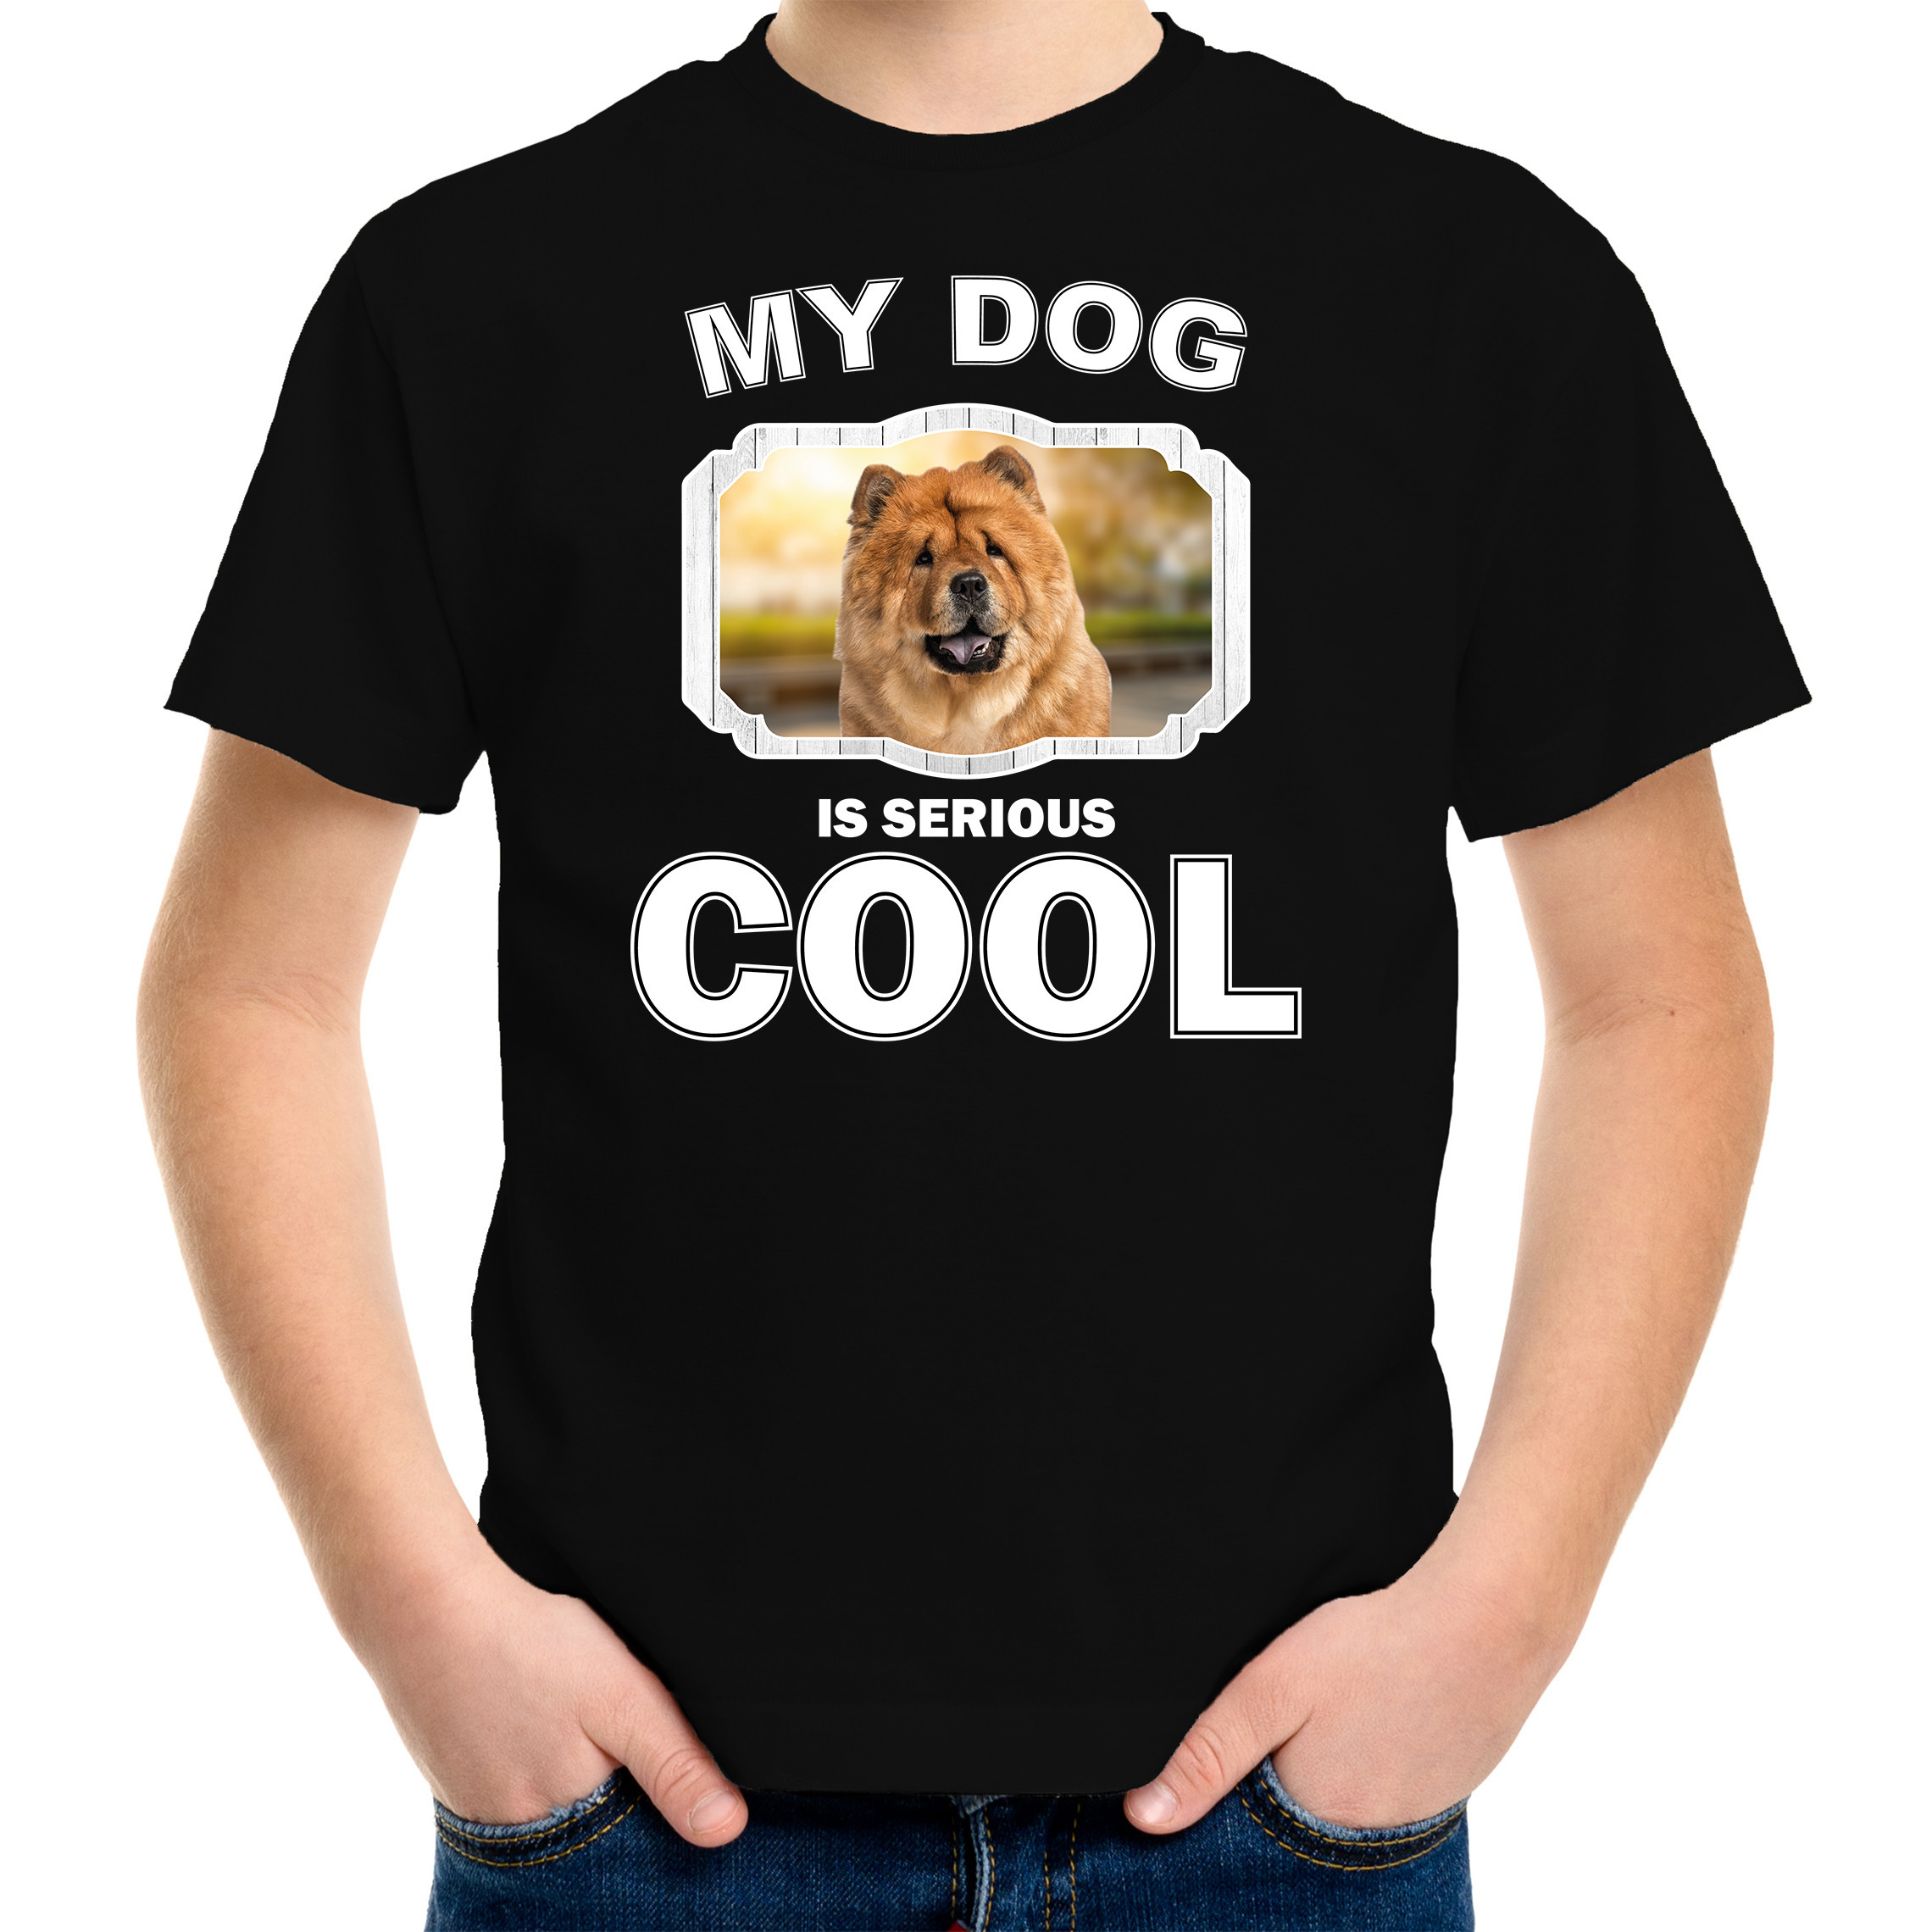 Honden liefhebber shirt Chow chow my dog is serious cool zwart voor kinderen